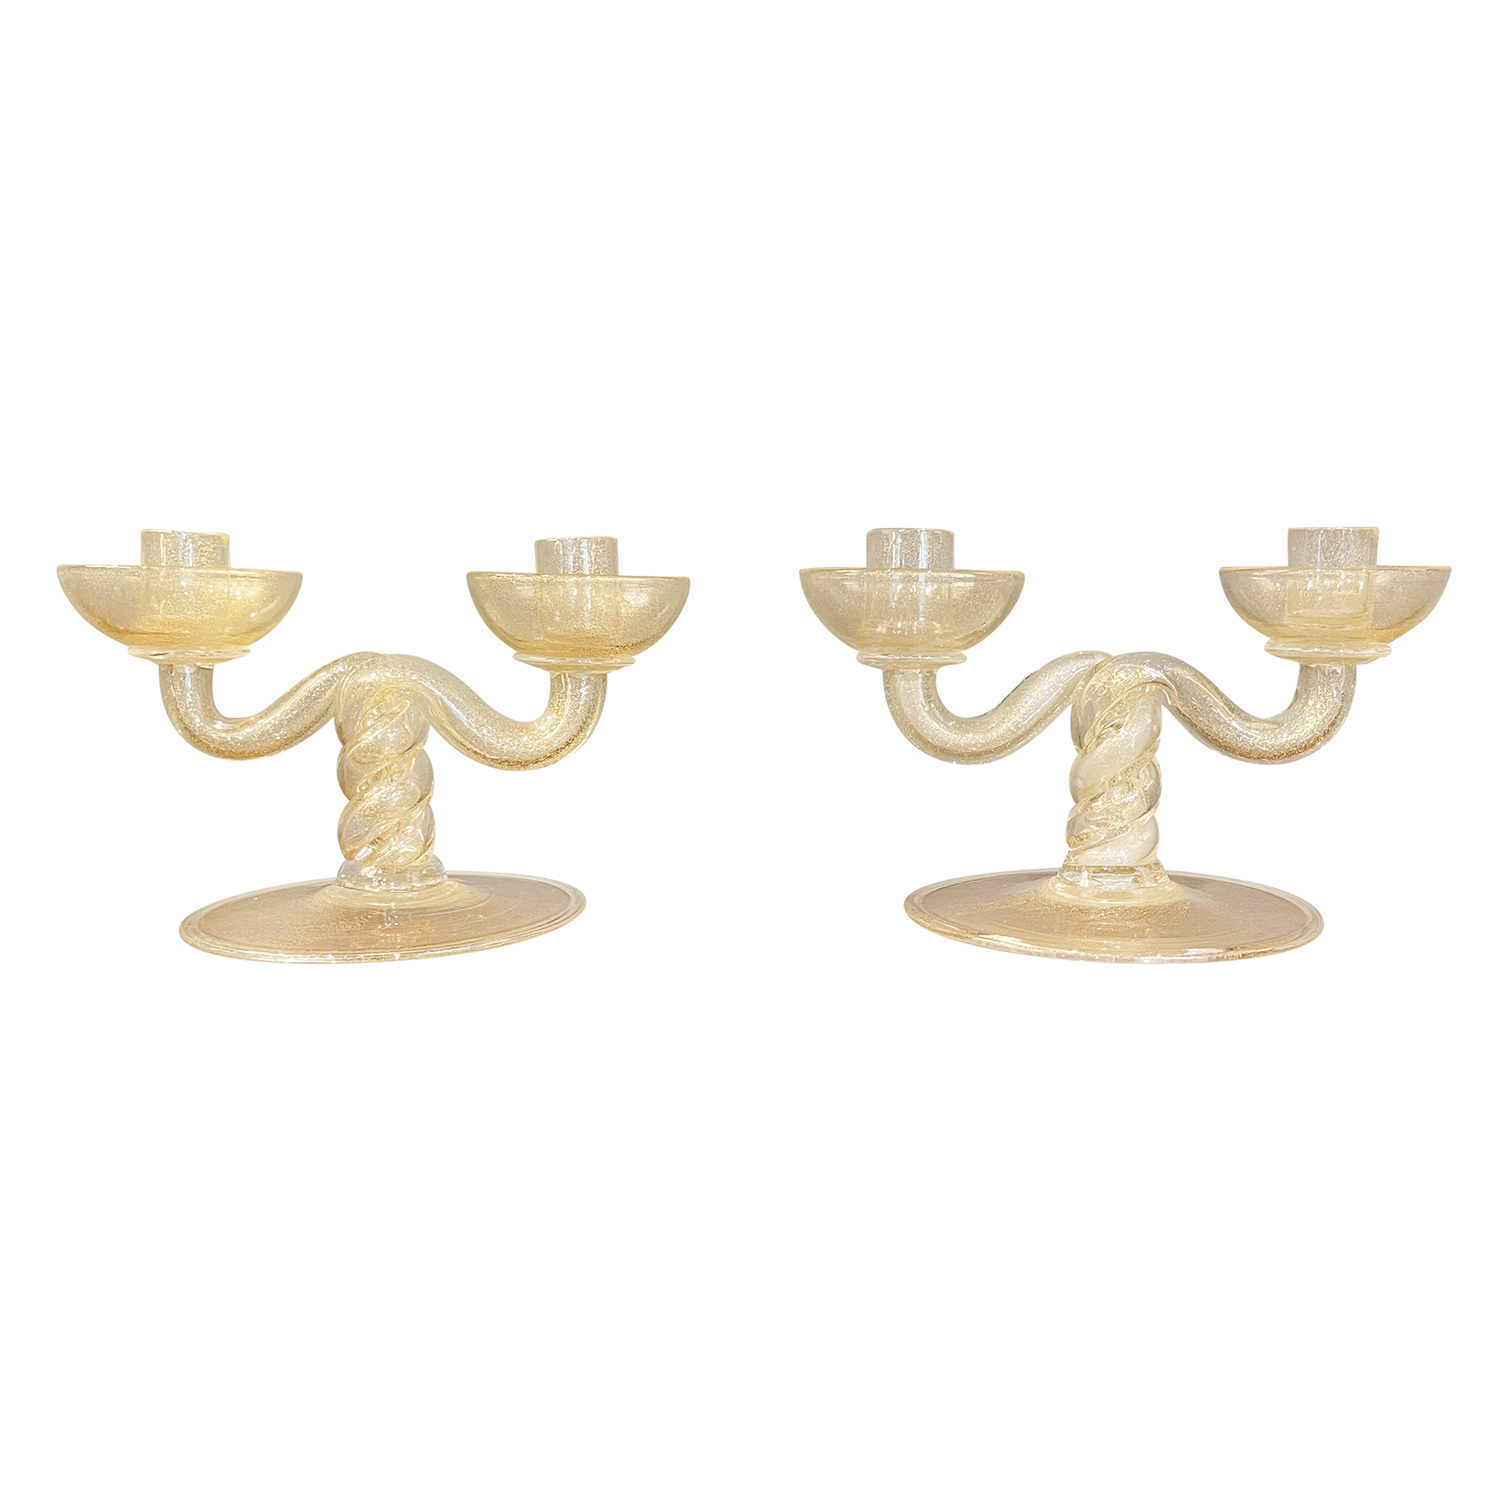 20th Century Italian Pair of Murano Glass Candleholders by Barovier & Toso